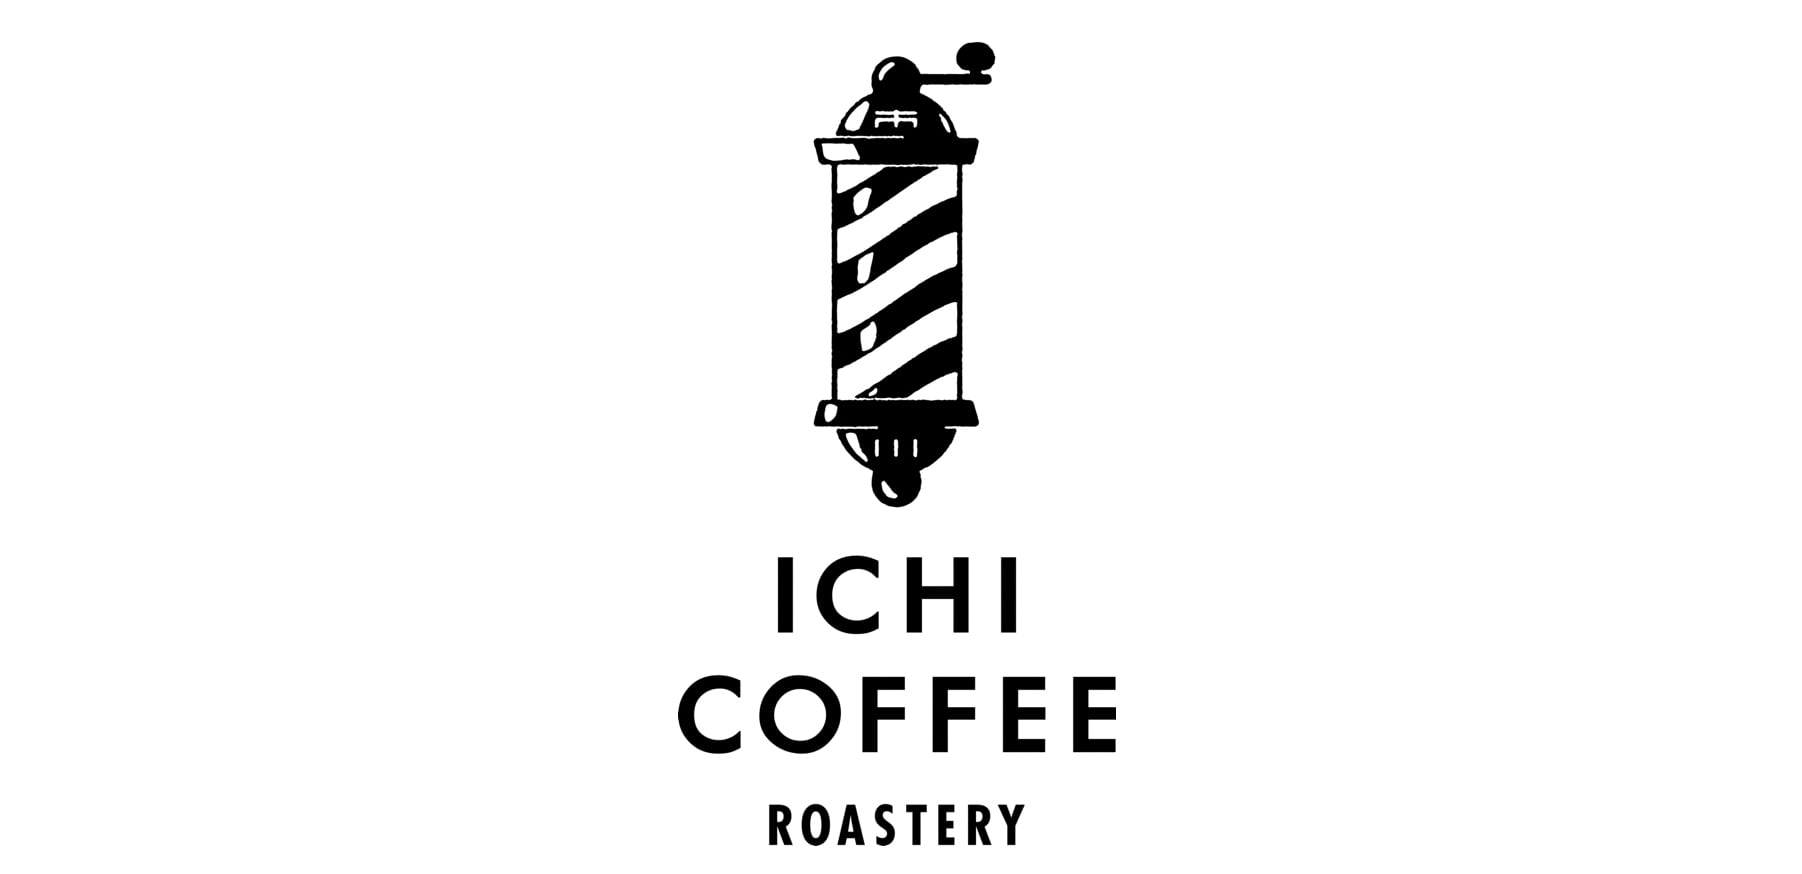 ICHI COFFEE ROASTERY